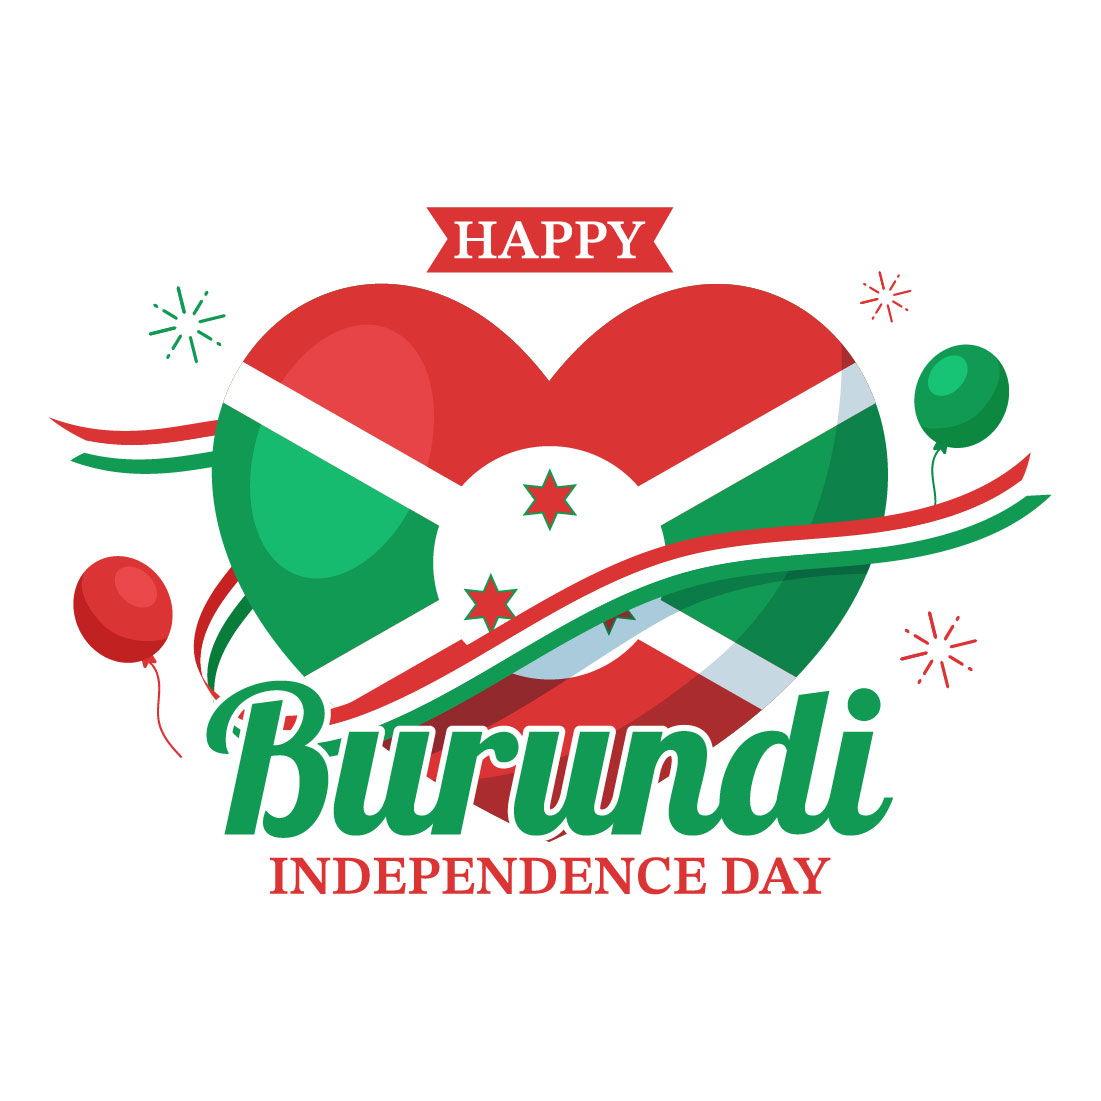 15 Burundi Independence Day Illustration preview image.